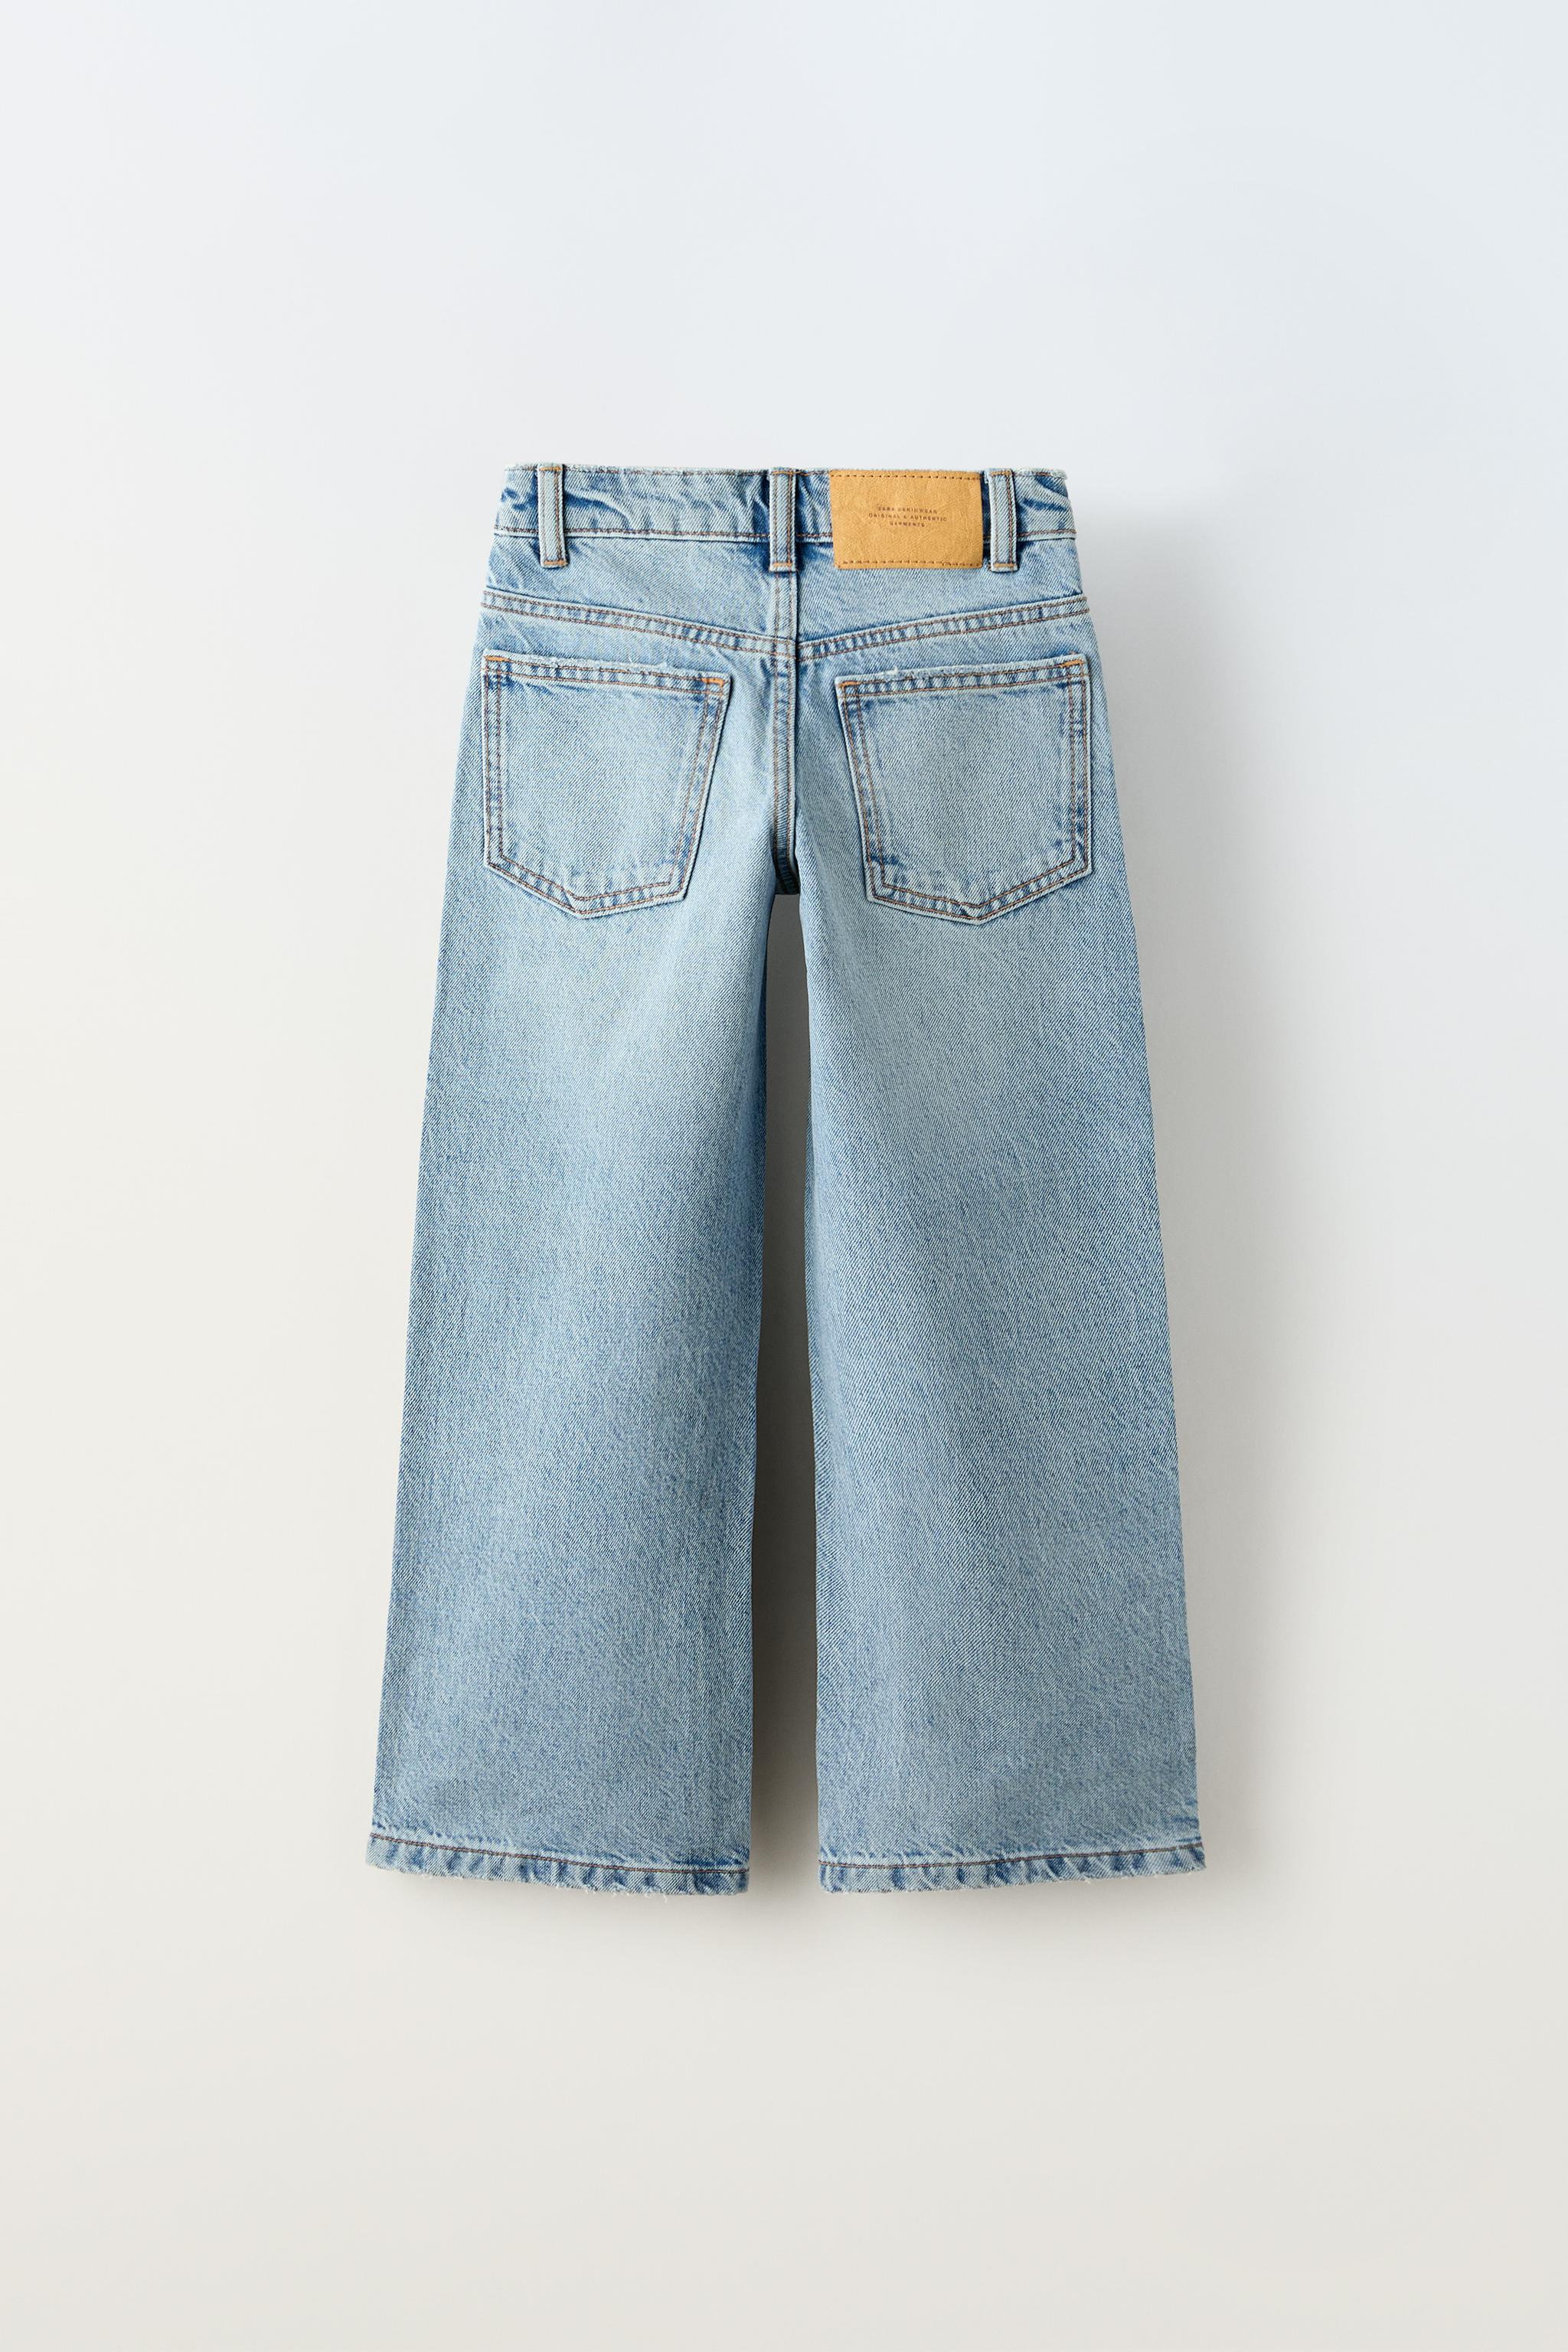 110-160cm Spring Kids Denim Loose Jeans Pants For Girls Crimped Wide Leg  Children Casual Teen